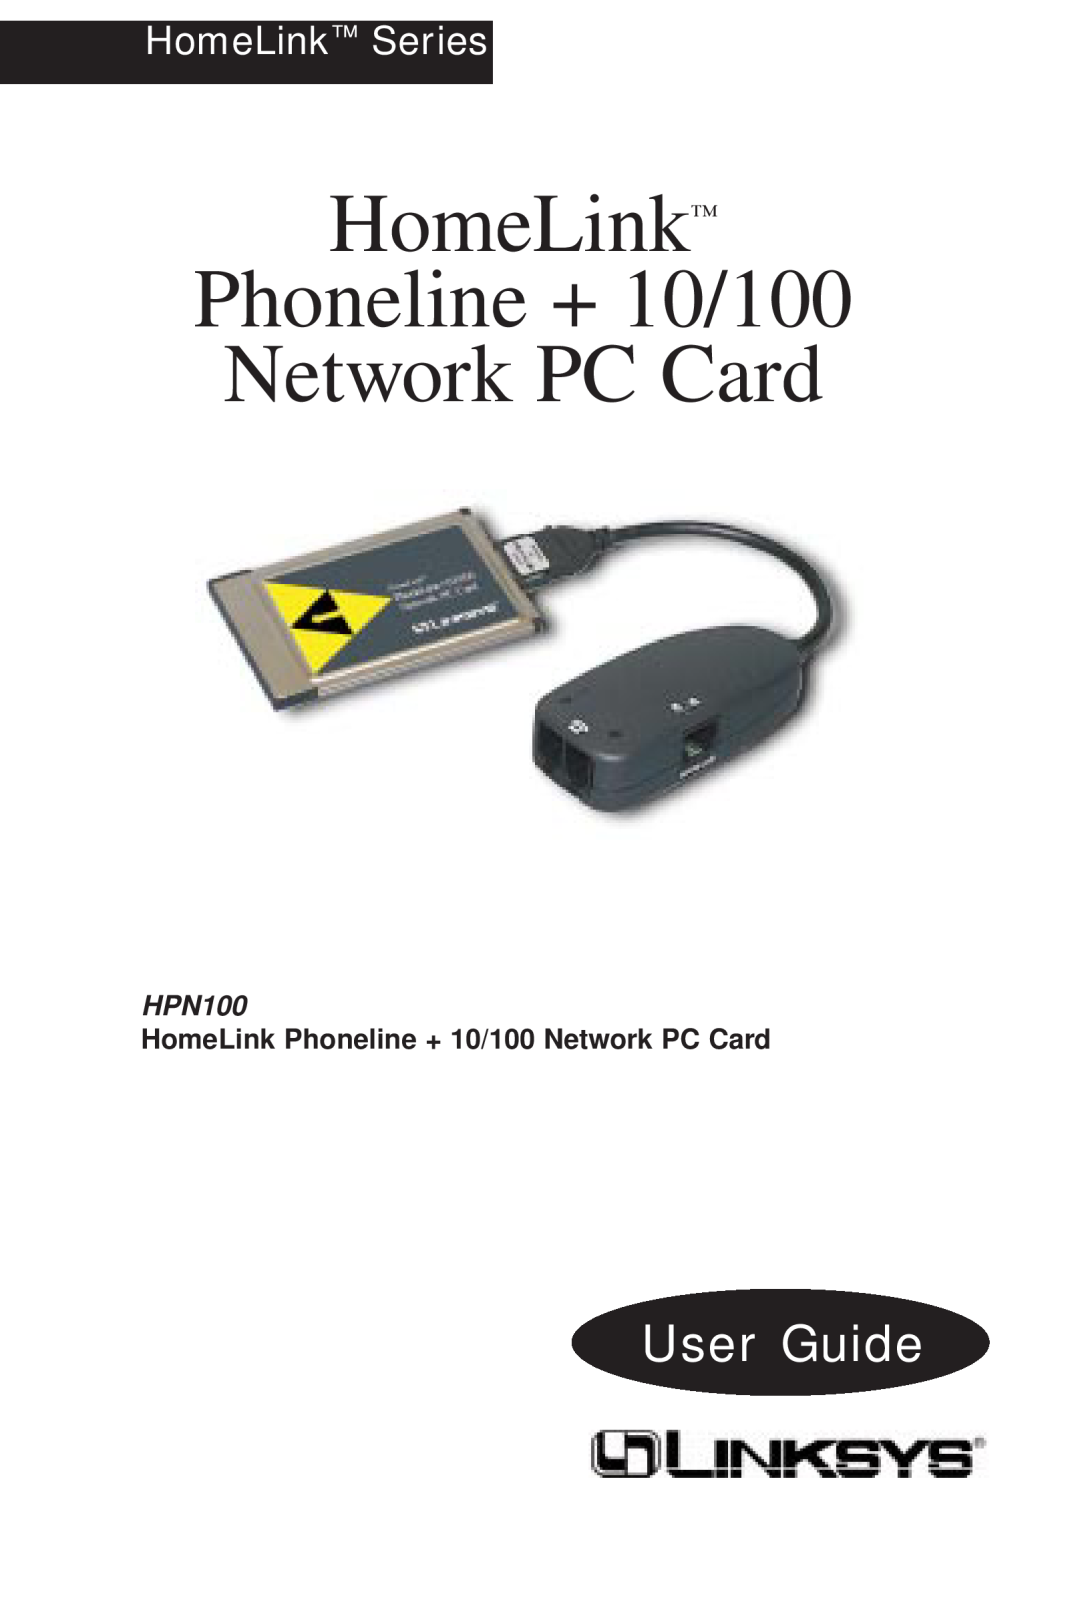 Linksys HPN100 manual HomeLink Phoneline + 10/100 Network PC Card, User Guide, HomeLink Series 